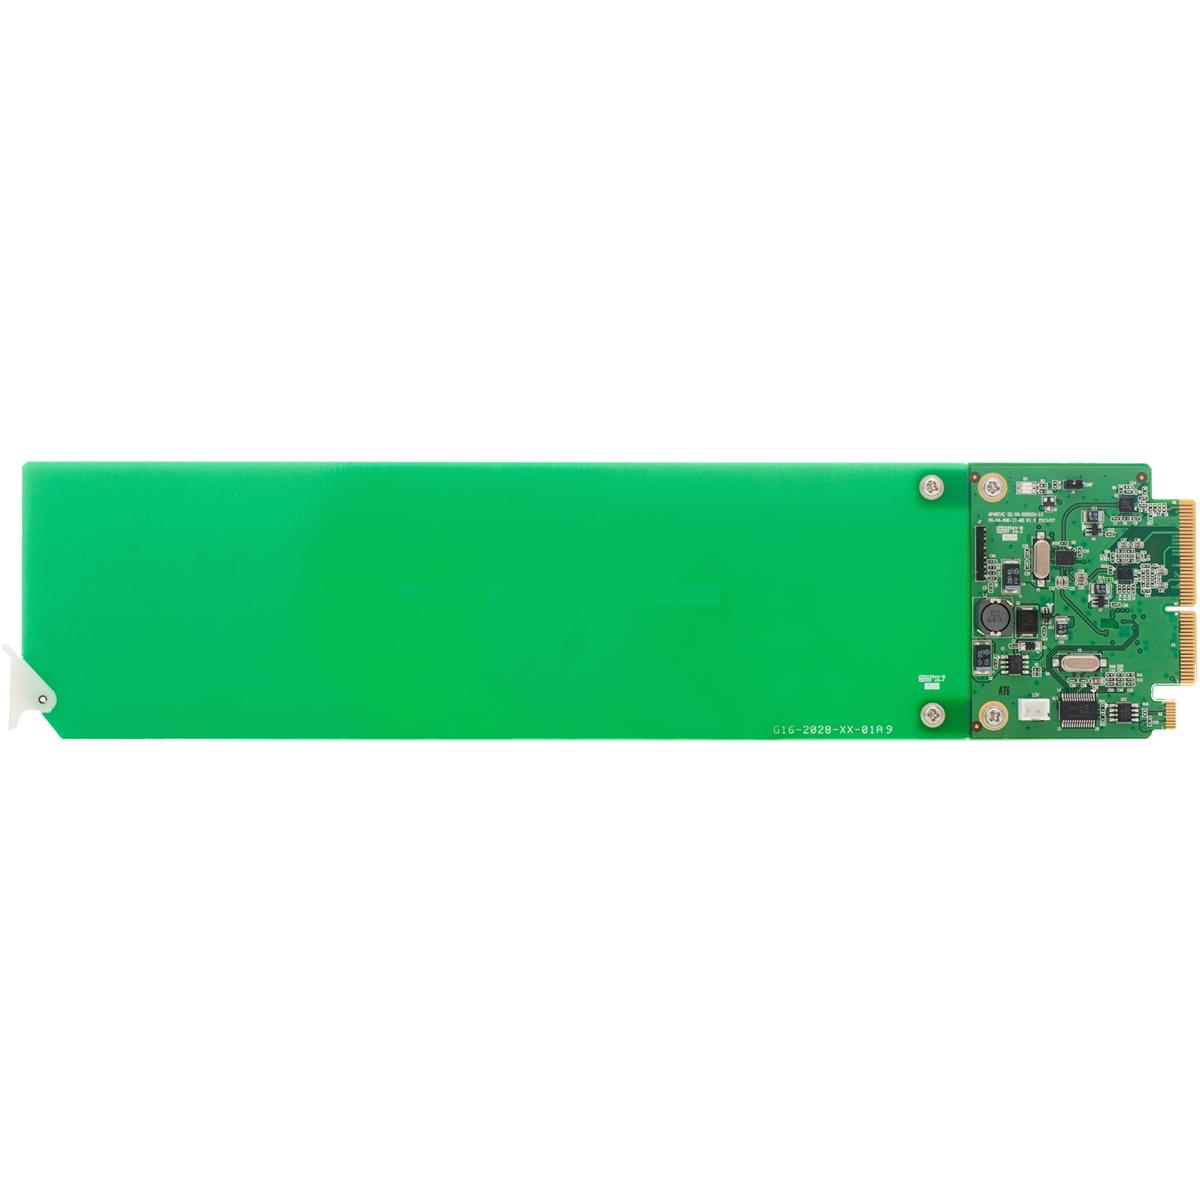 Image of Apantac Rear Module for openGear SDI Distribution Amplifier Card